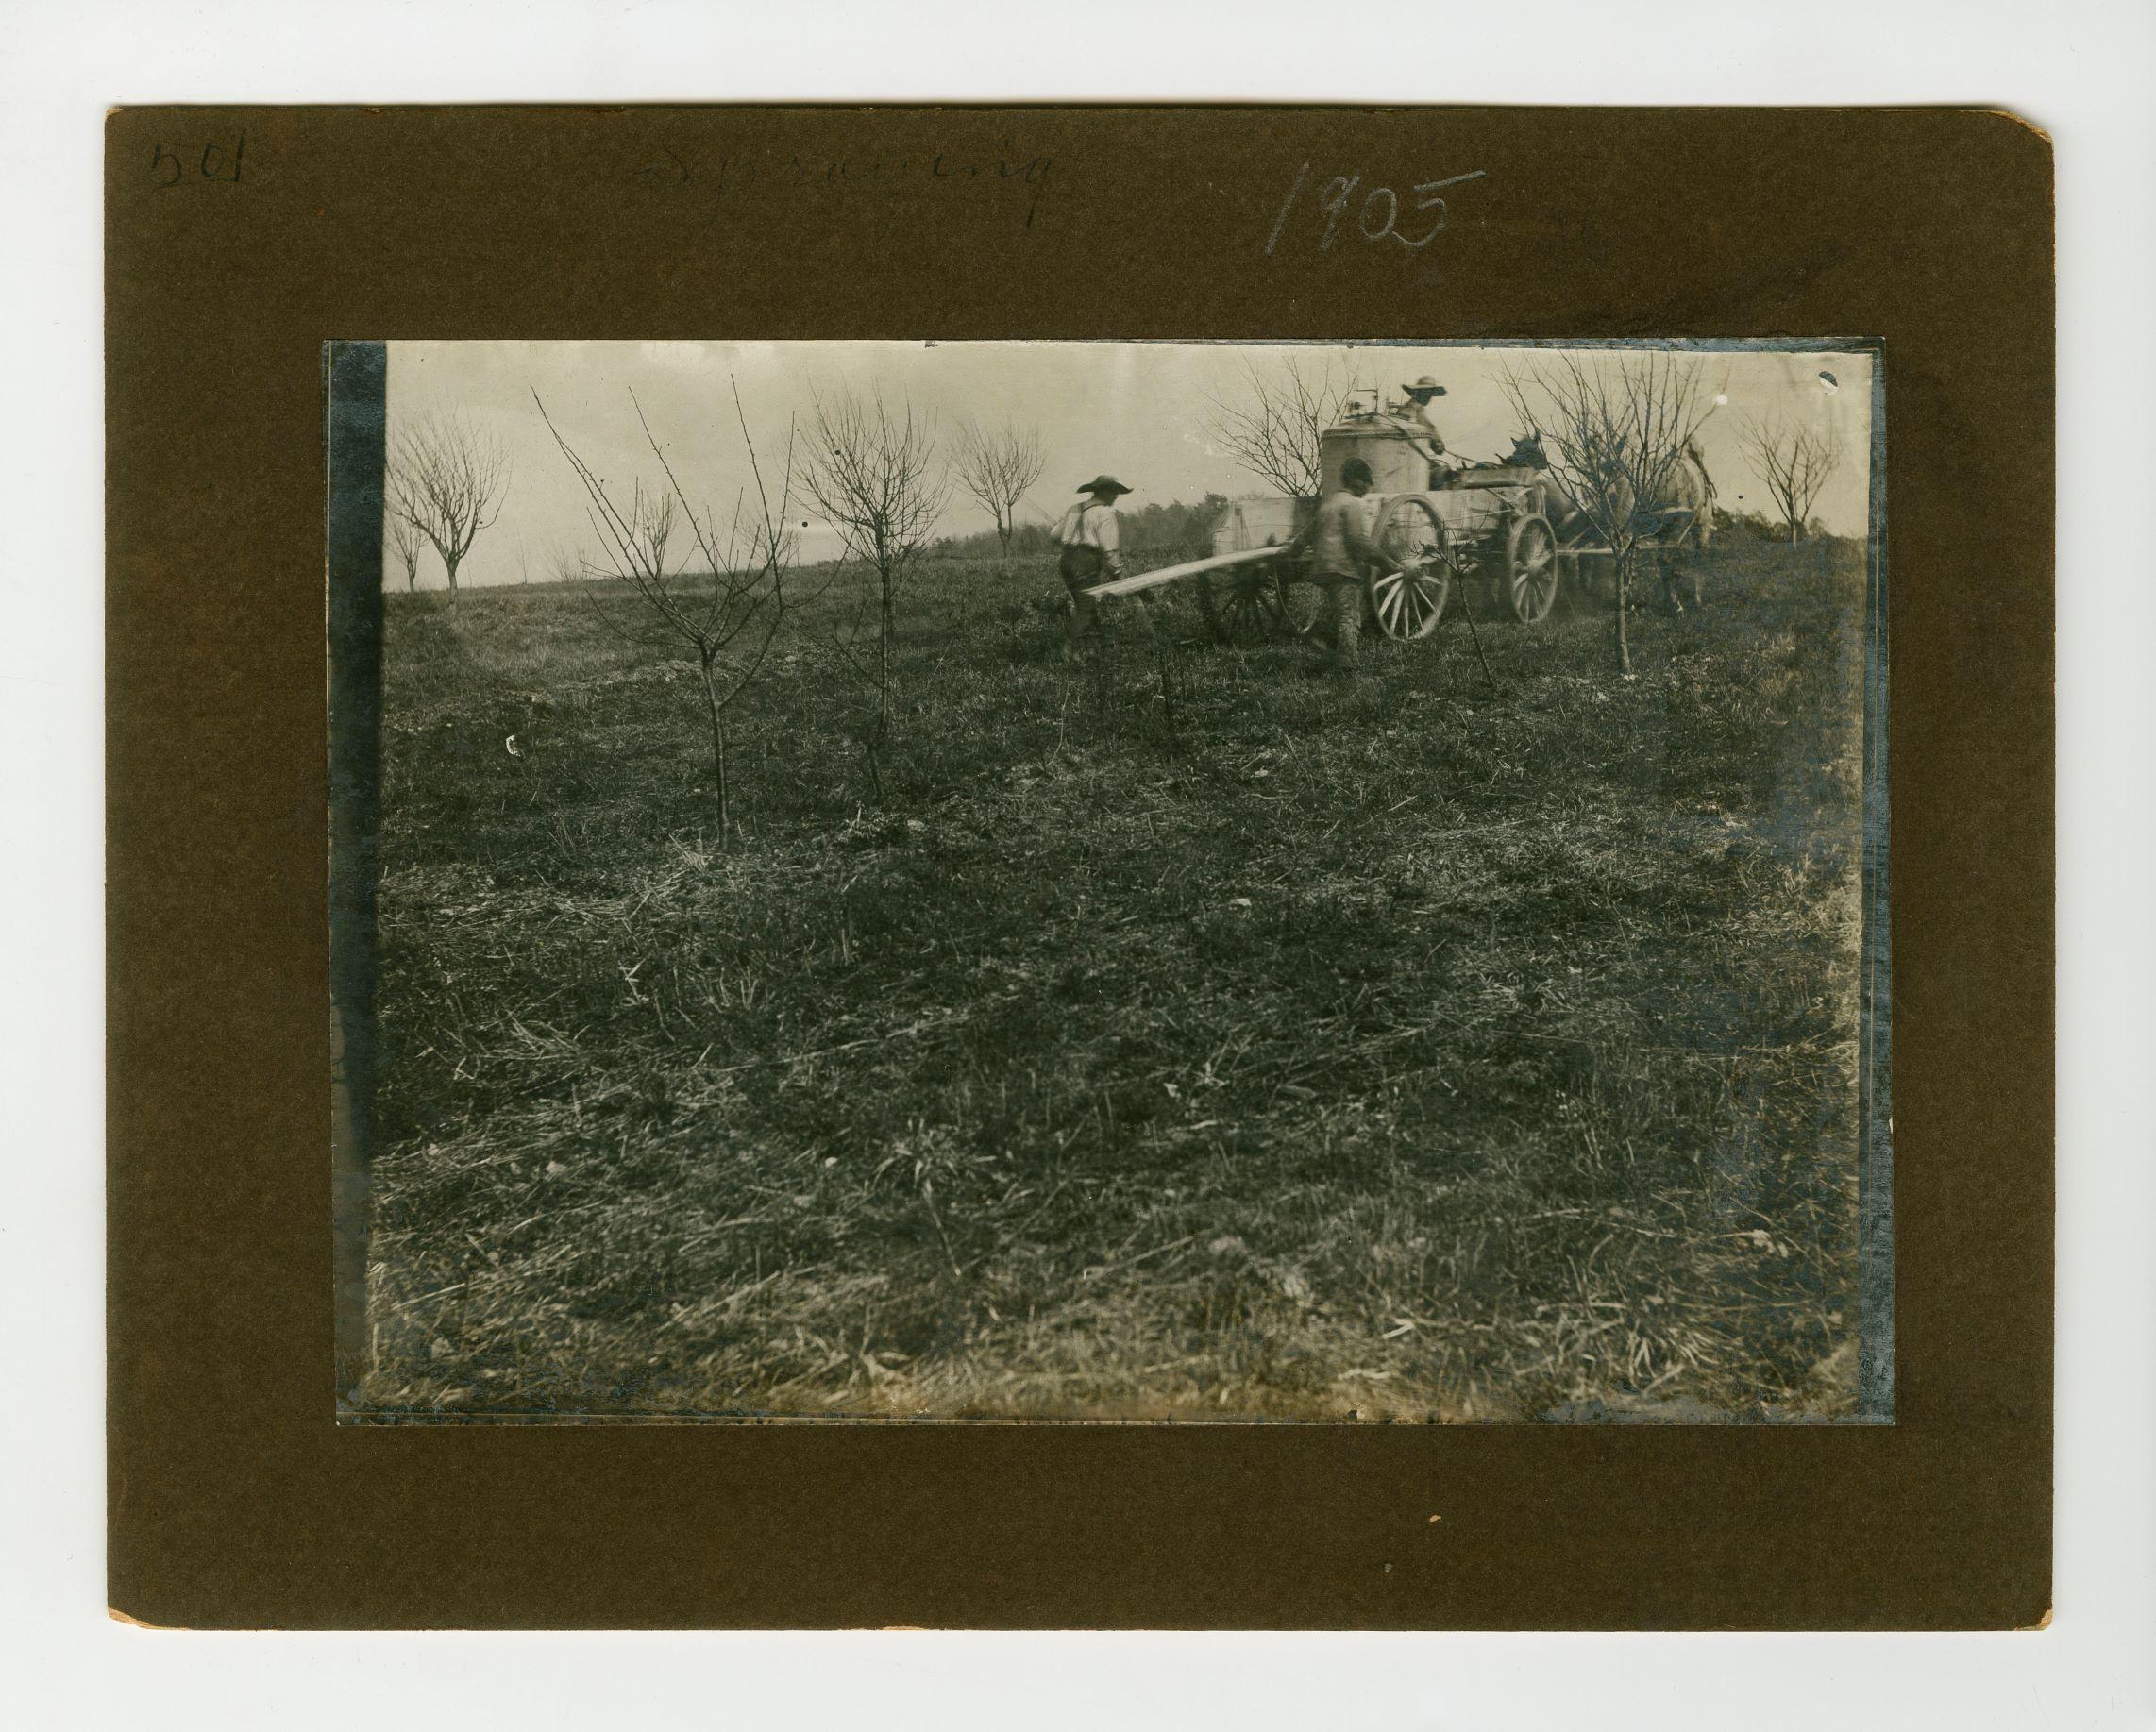 Black man sat atop a horse-drawn cart, spraying fields while two Black men follow behind